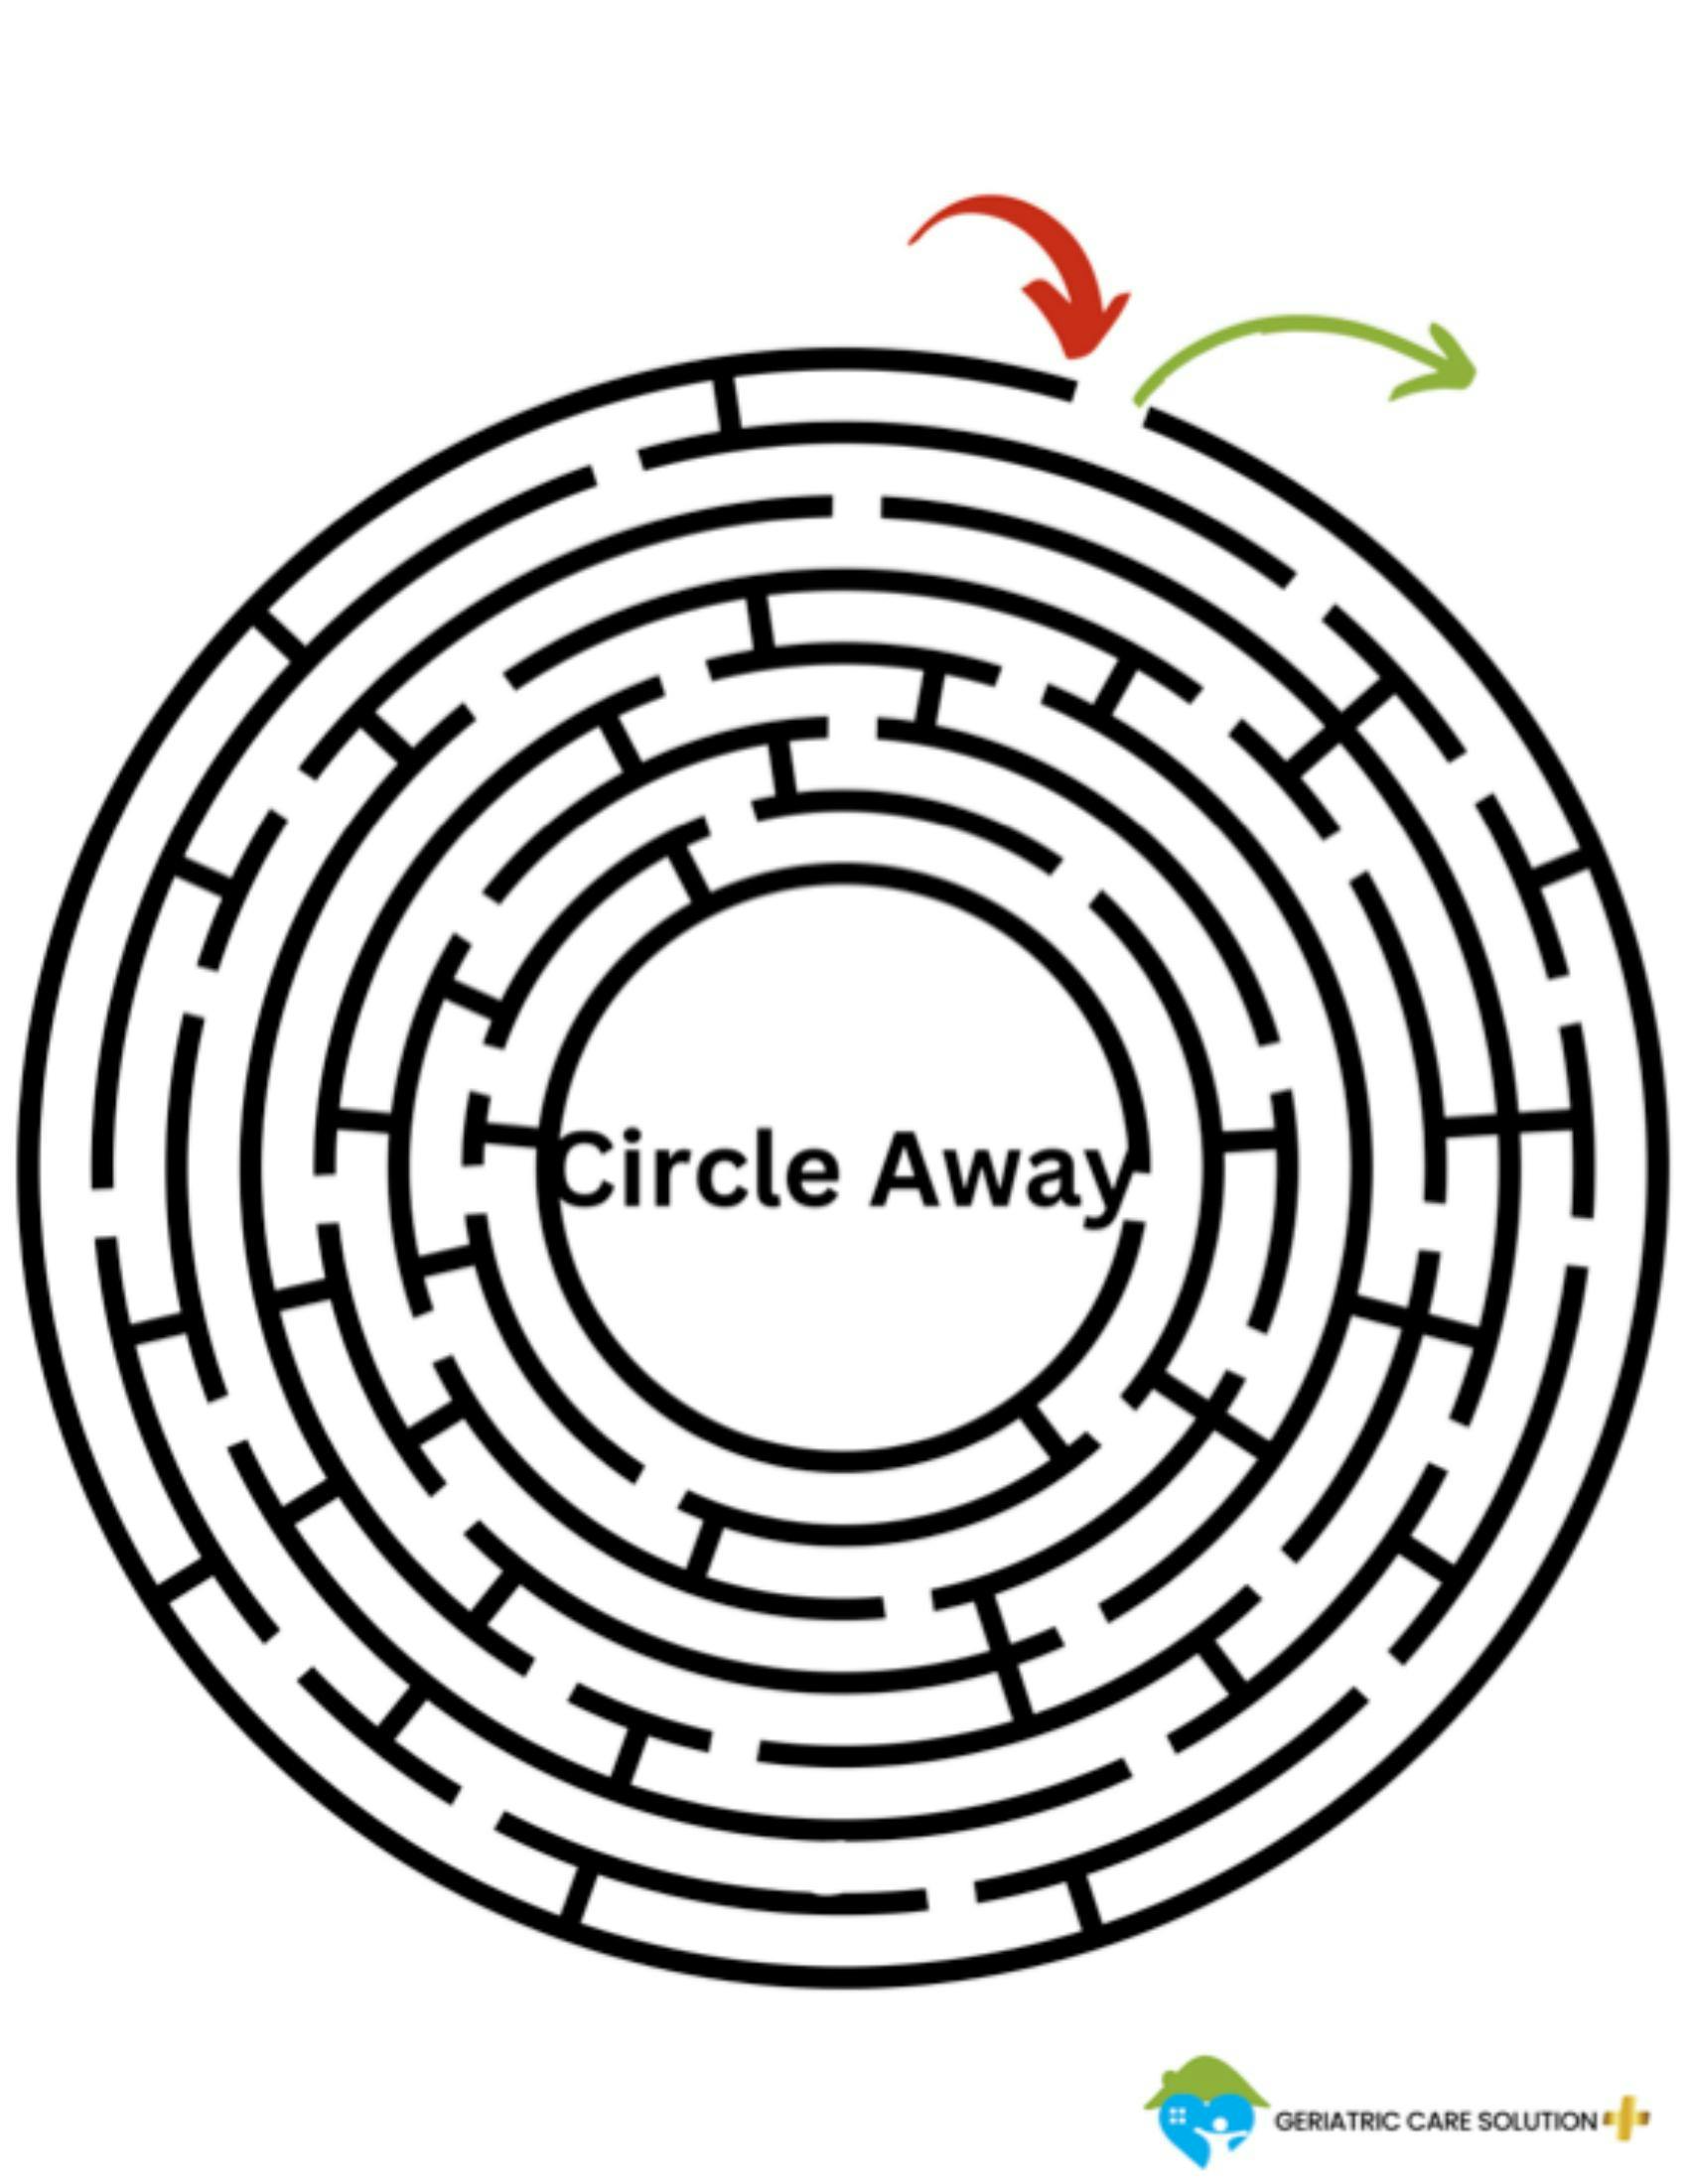 Circle Away